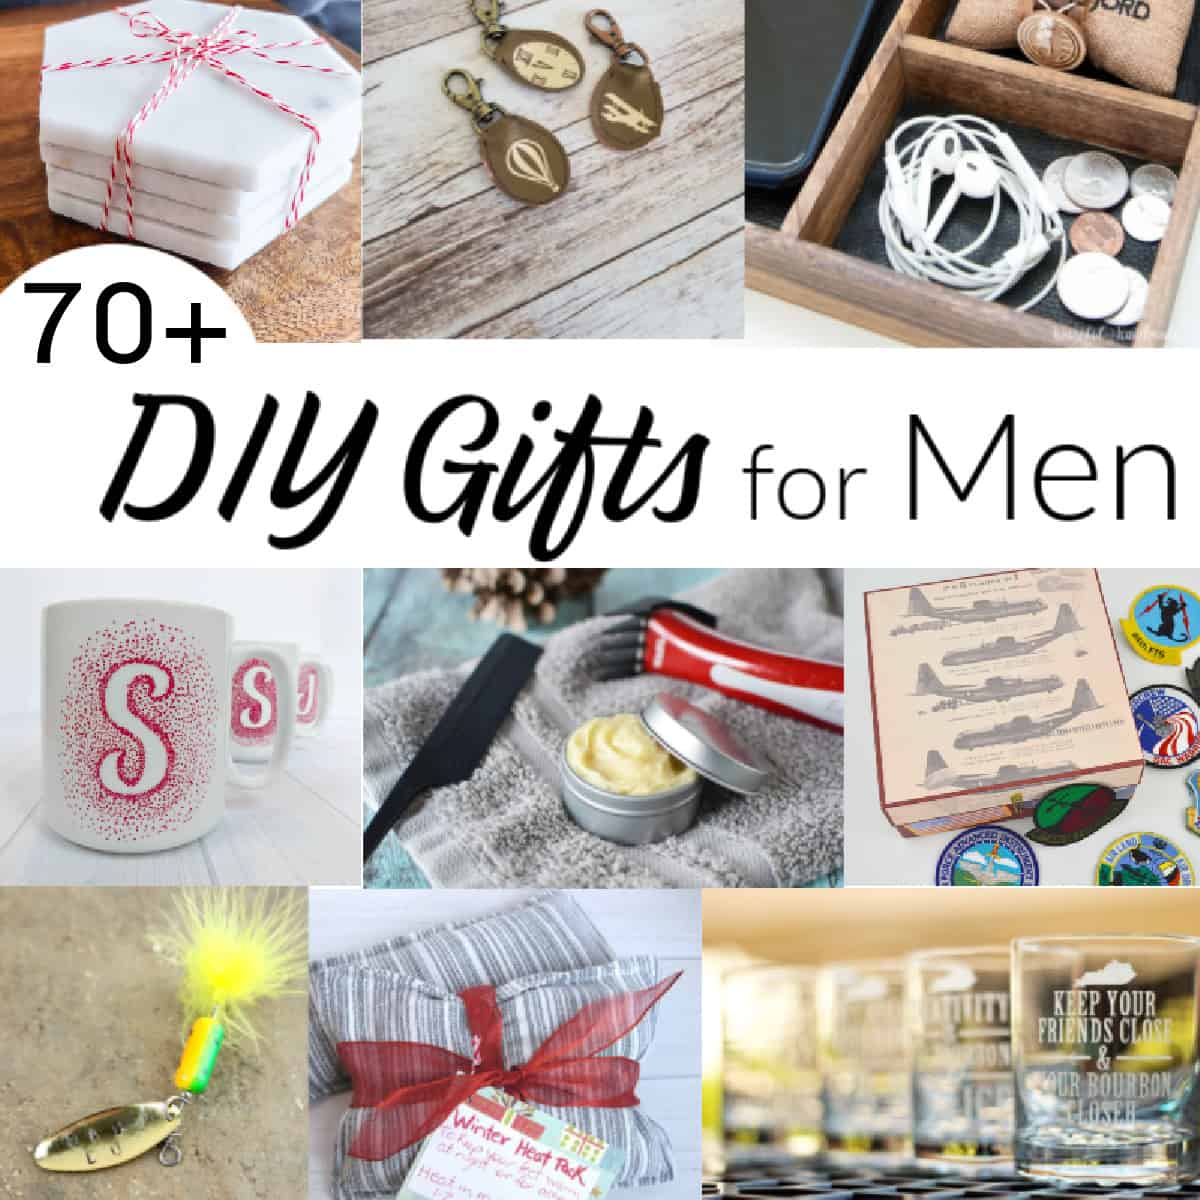 DIY Gifts for Men - Organized 31